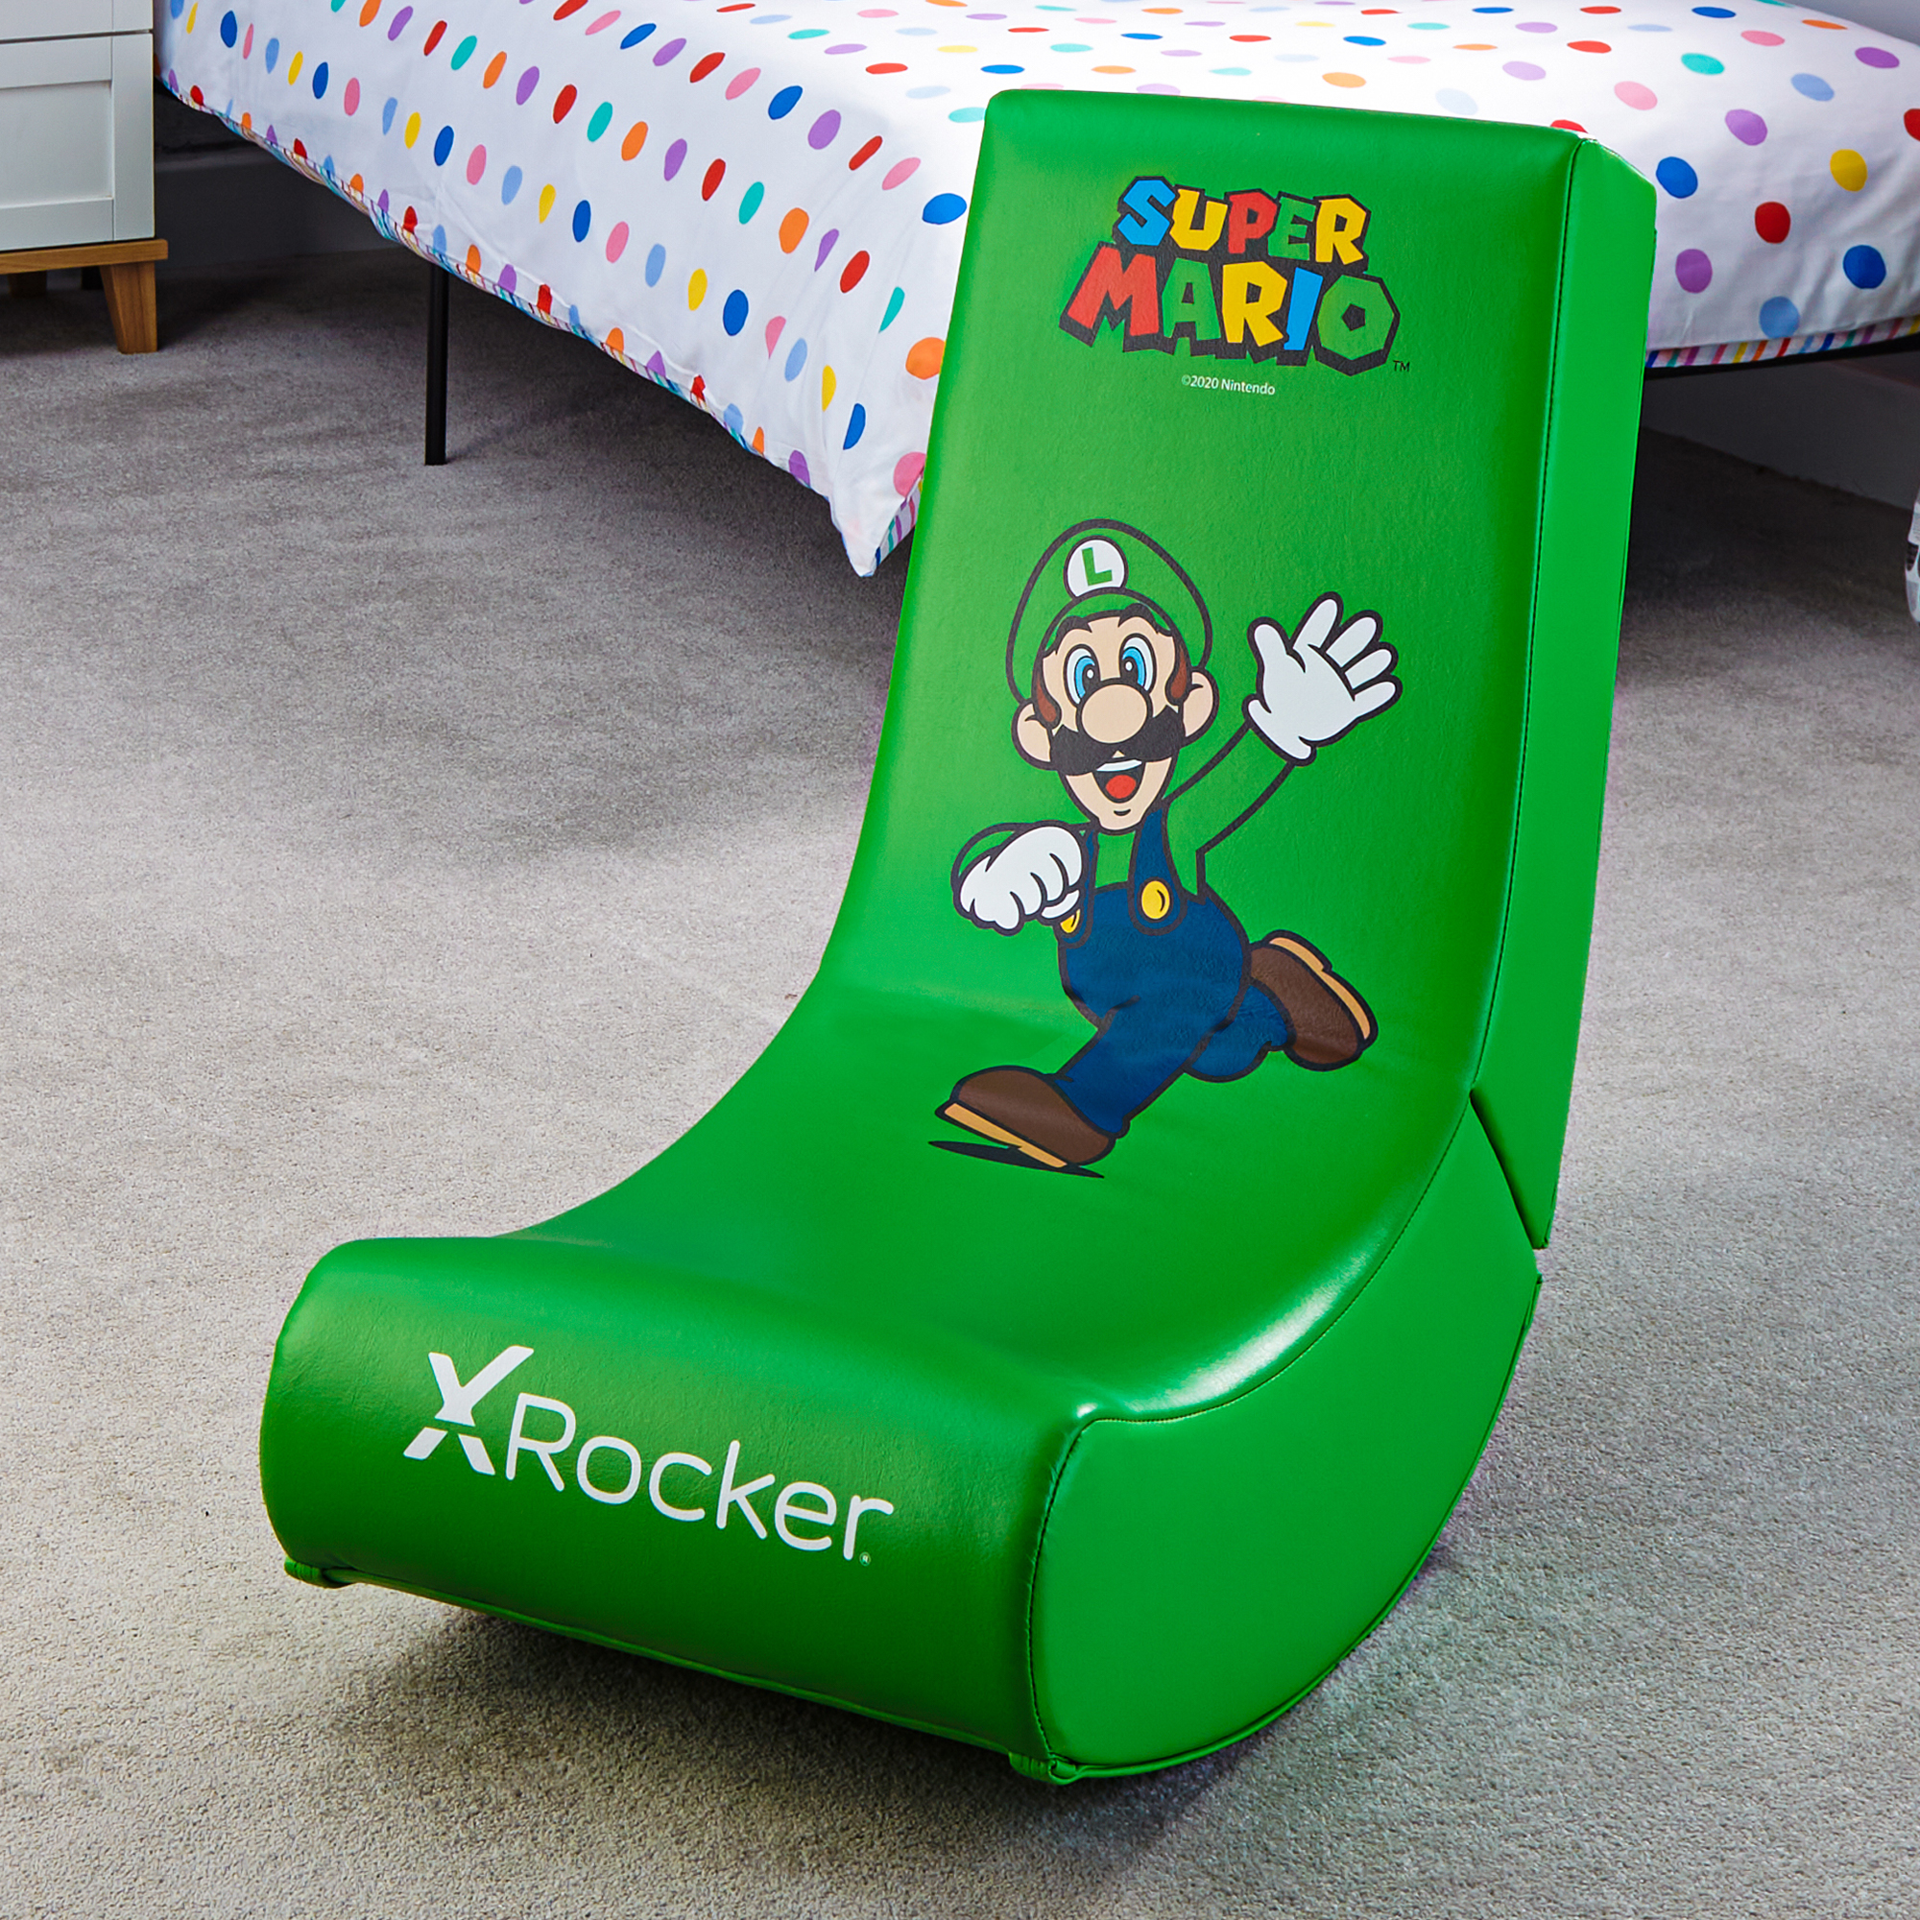 X Rocker - Siège de jeu Video Rocker Super Mario officiel Luigi Joy Edition